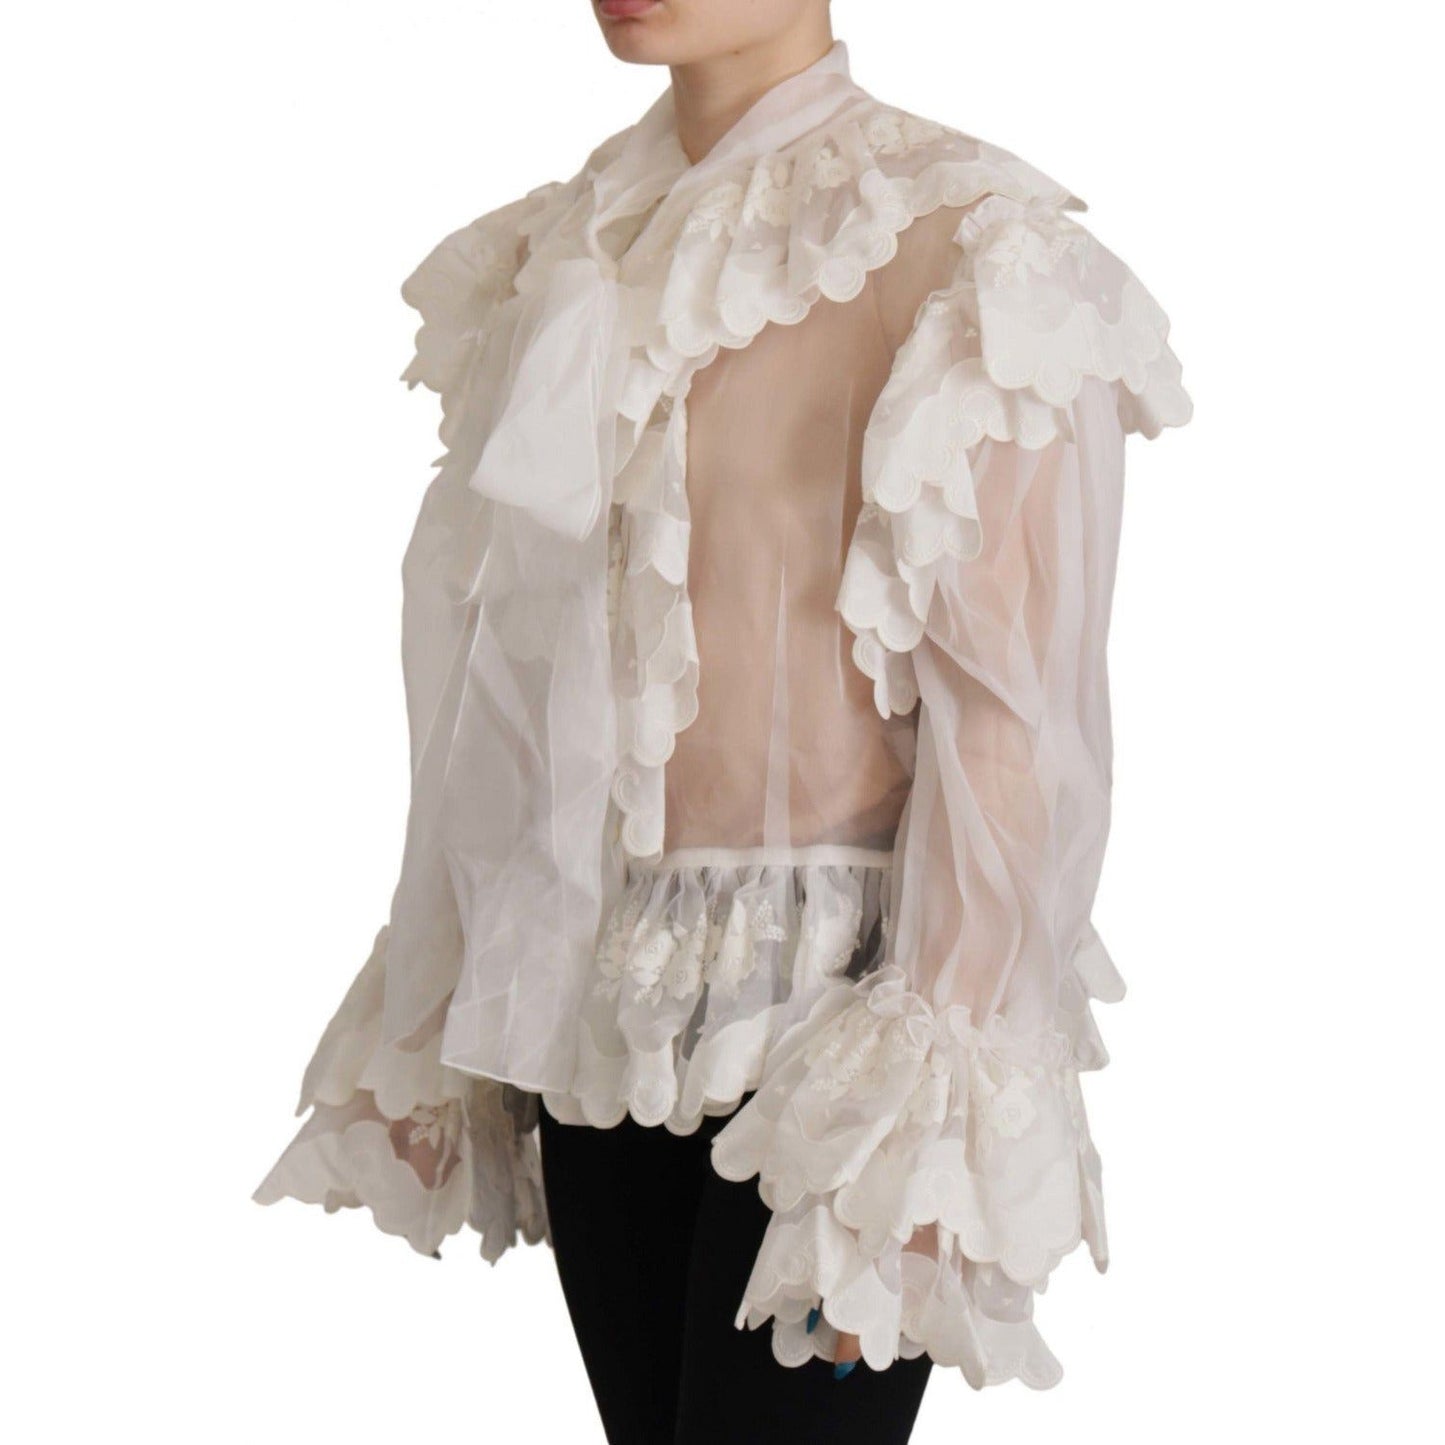 Dolce & Gabbana Elegant White Lace Silk-Cotton Top white-ruffles-lace-long-sleeve-blouse-top